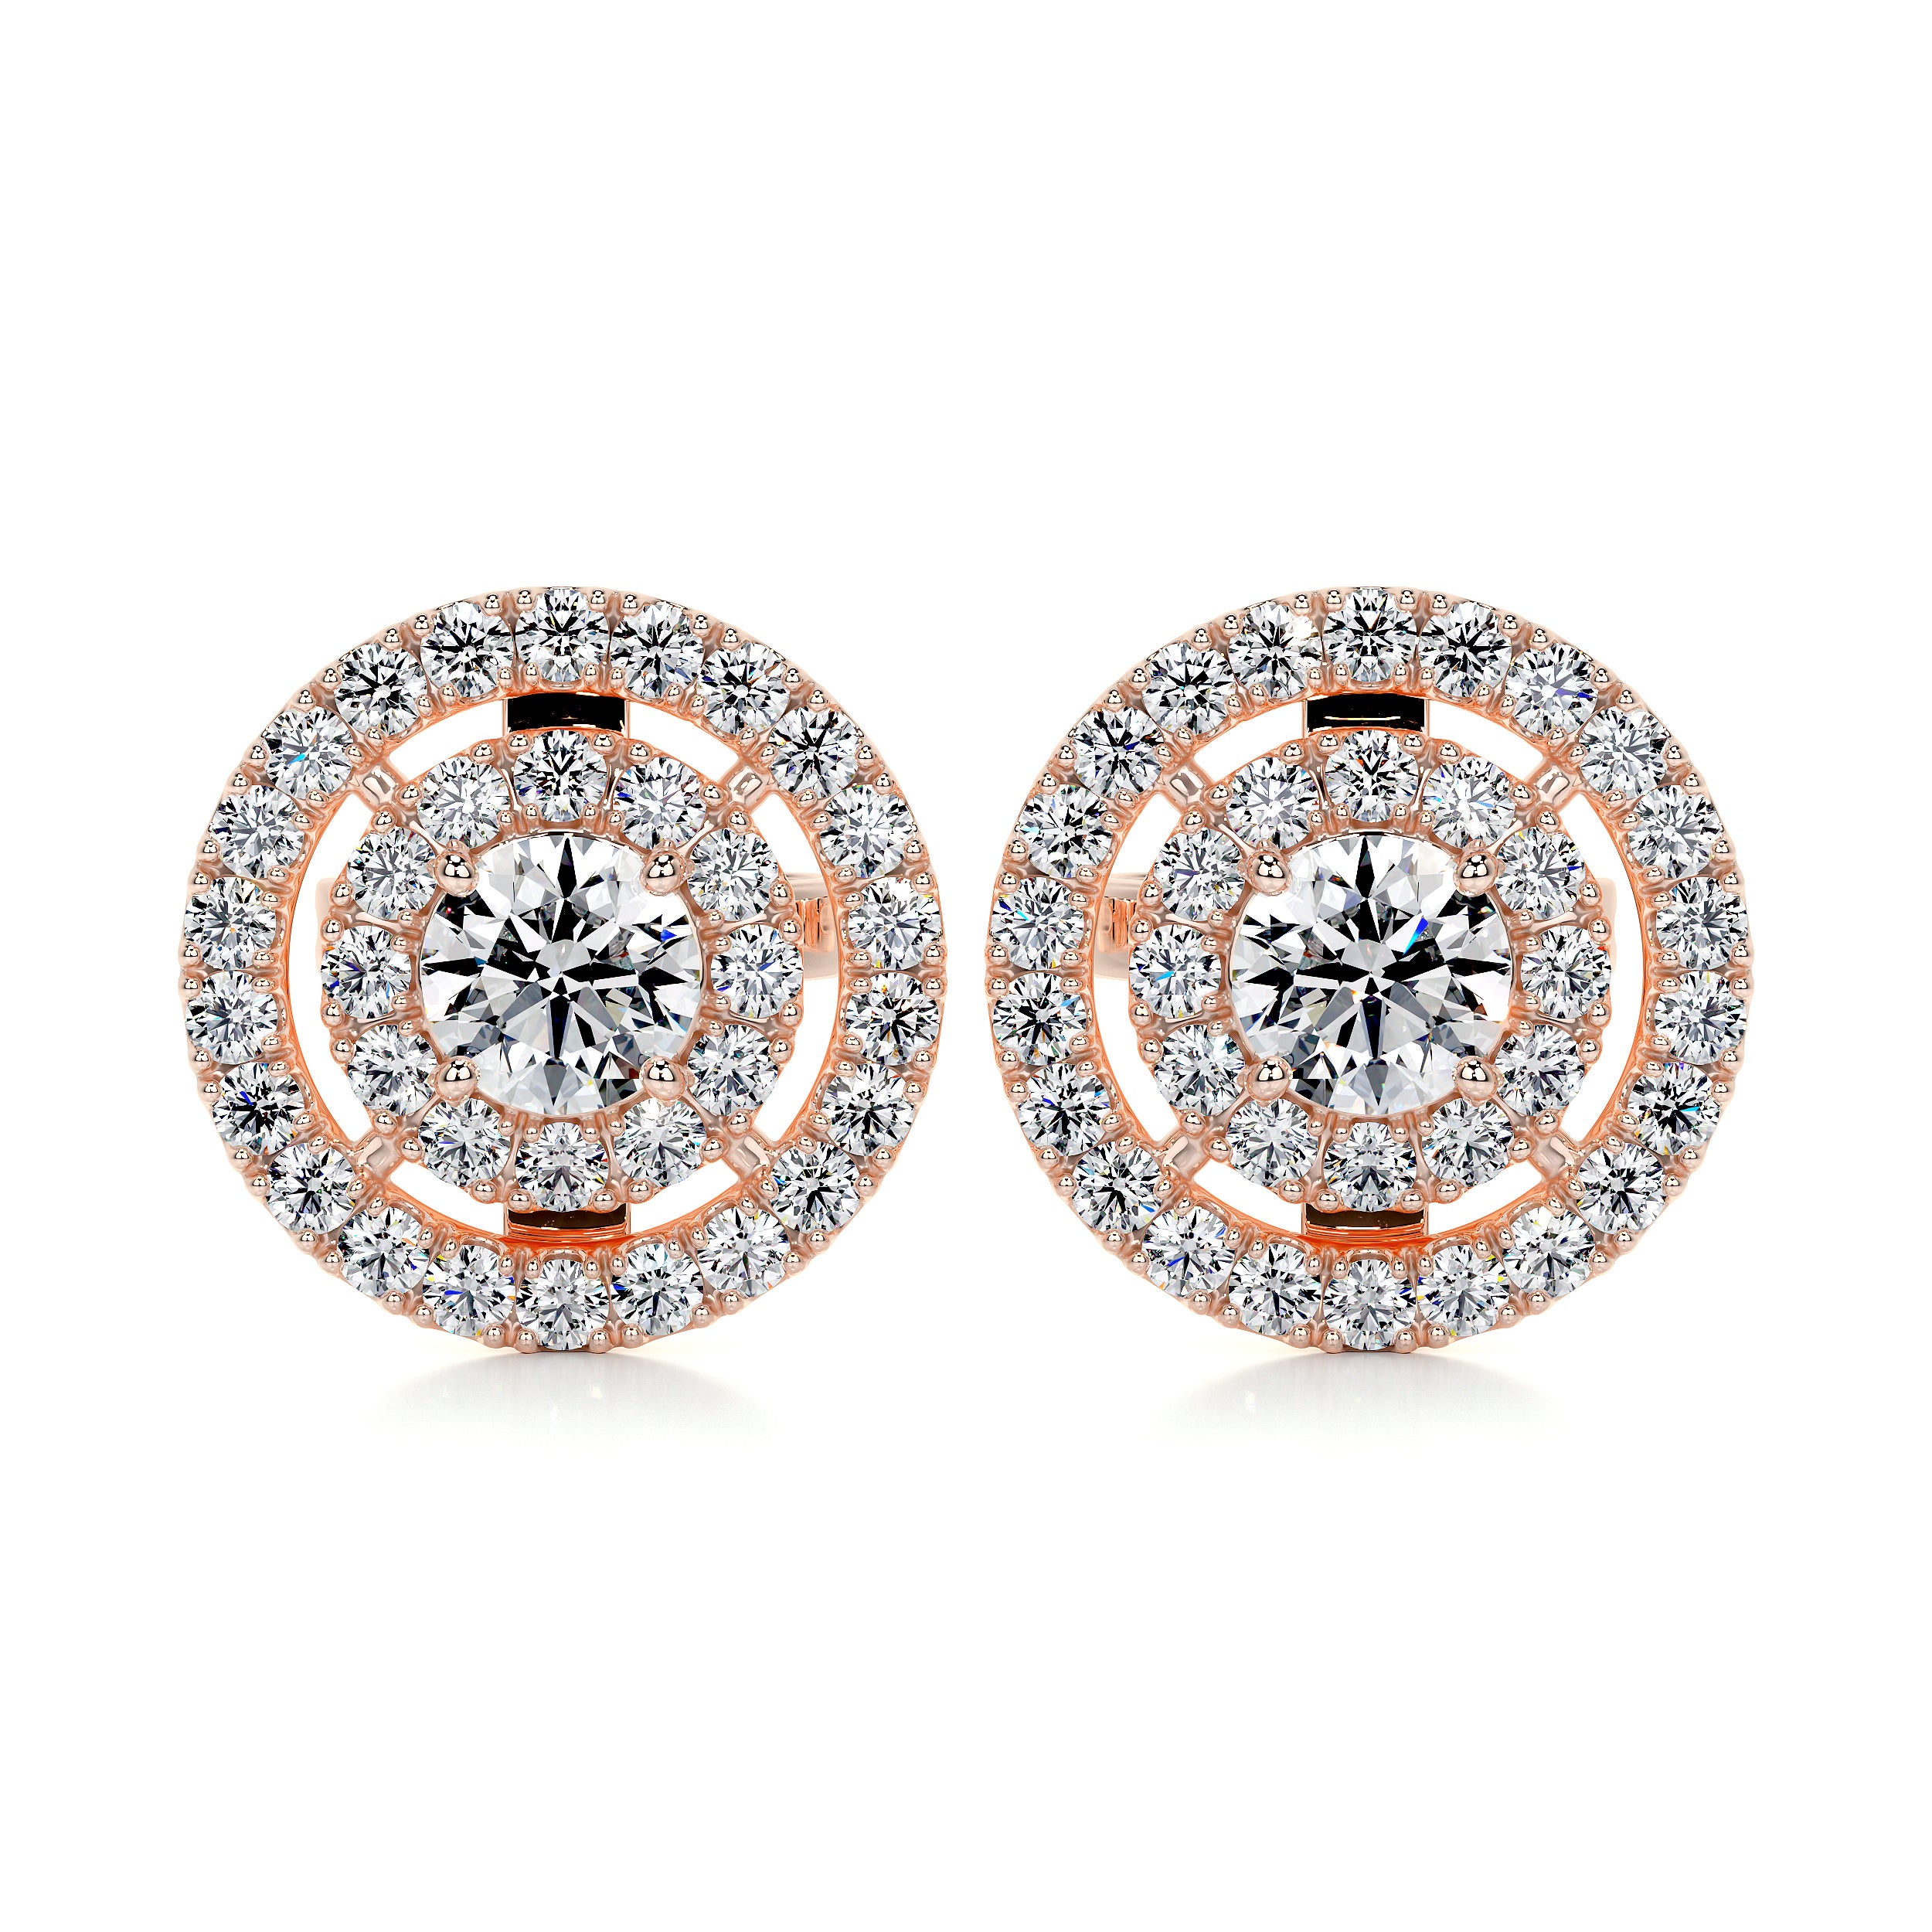 Joan Diamond Earrings   (1 Carat) - 14K Rose Gold